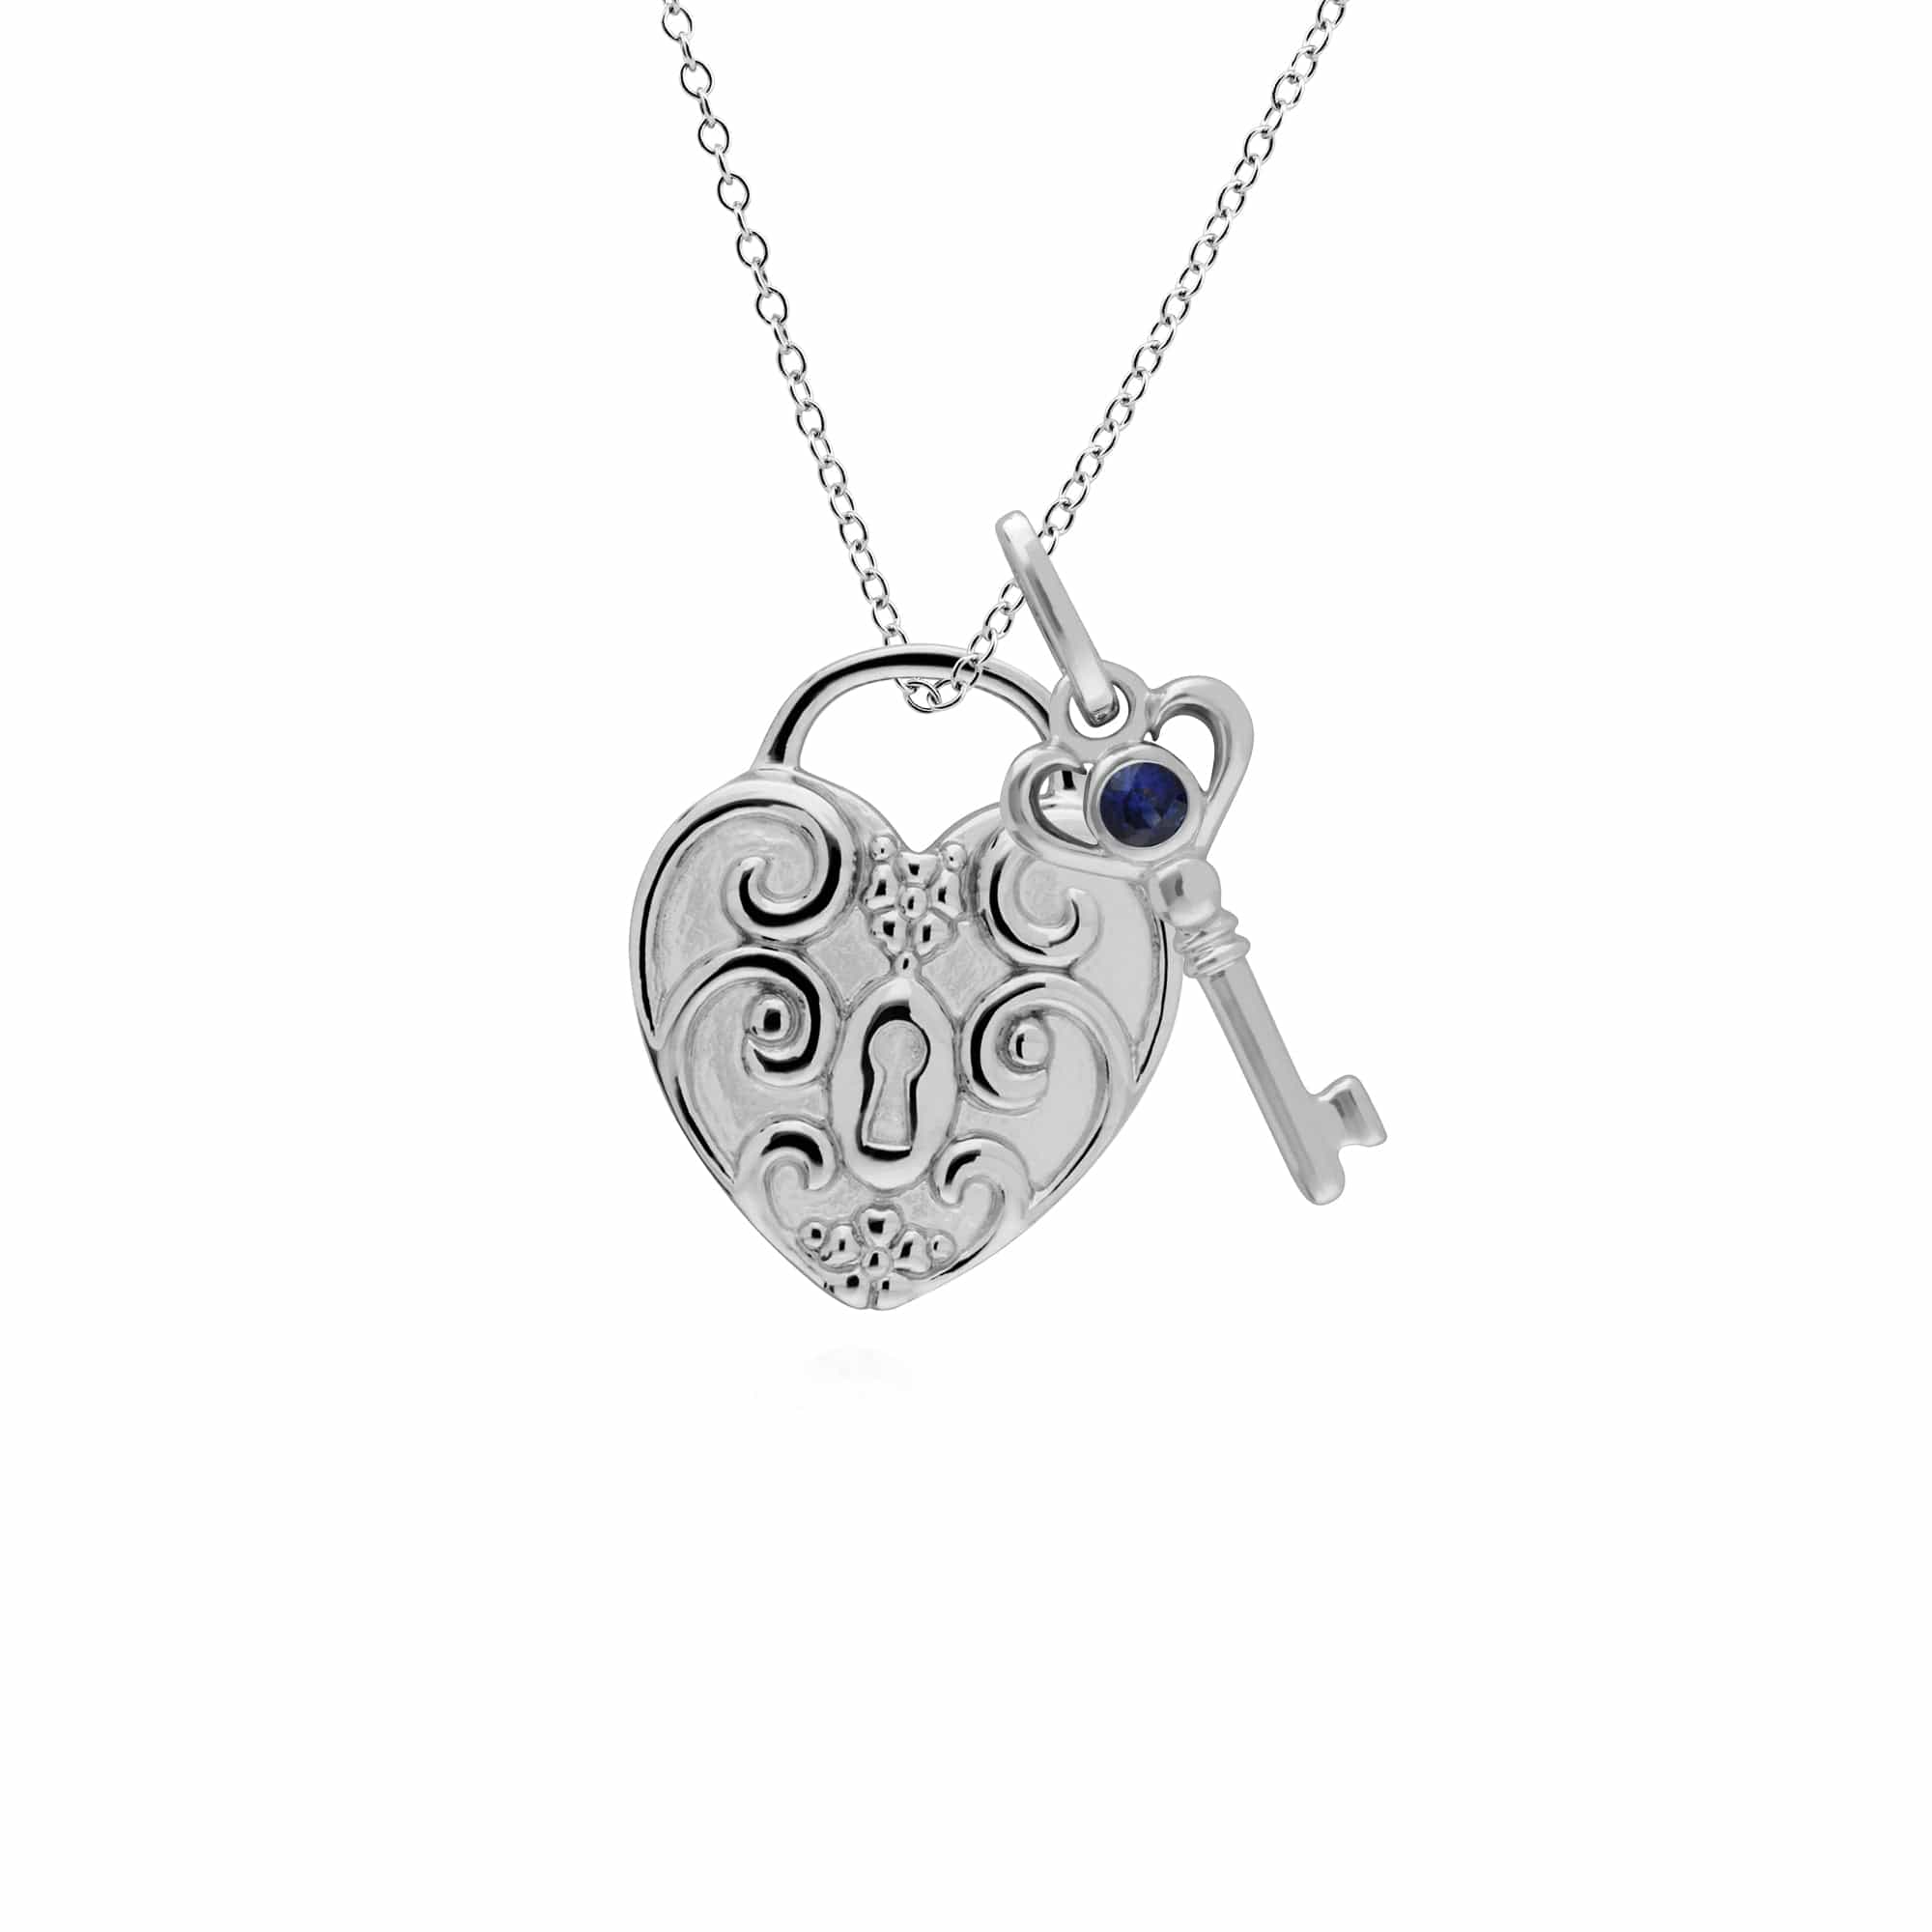 270P026403925-270P026601925 Classic Swirl Heart Lock Pendant & Sapphire Key Charm in 925 Sterling Silver 1